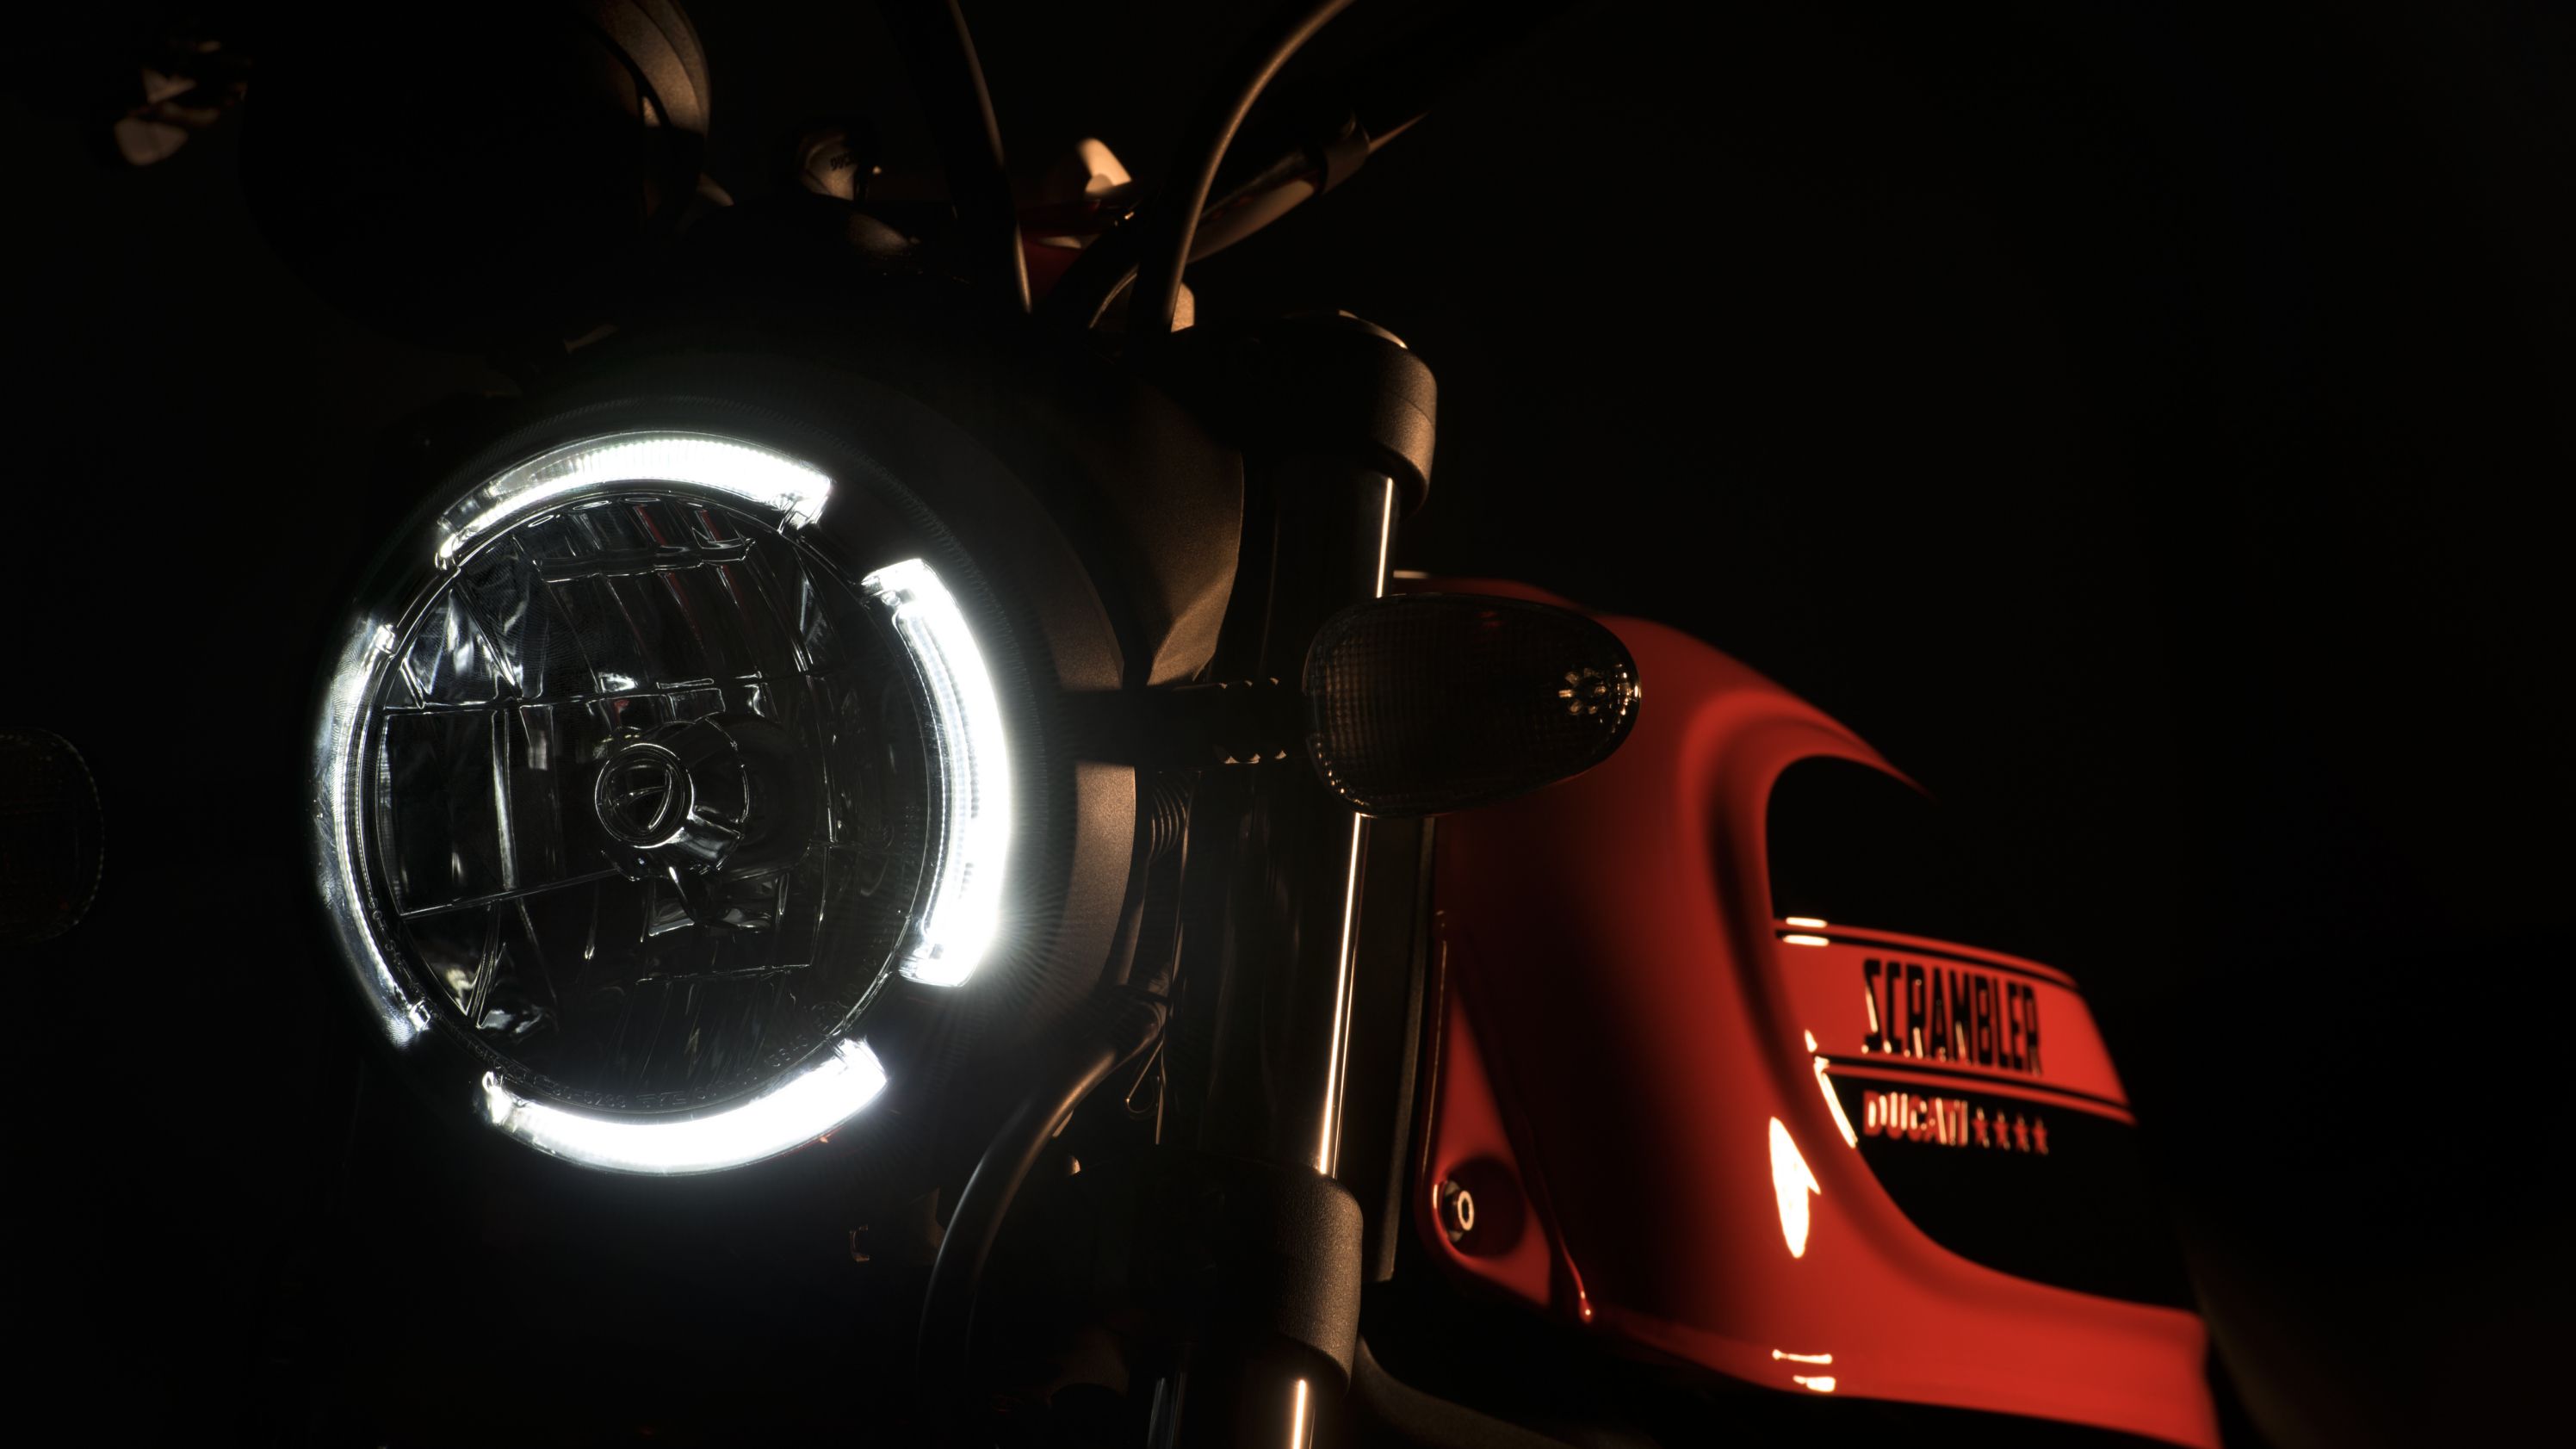 2016 - 2019 Ducati Scrambler Sixty2